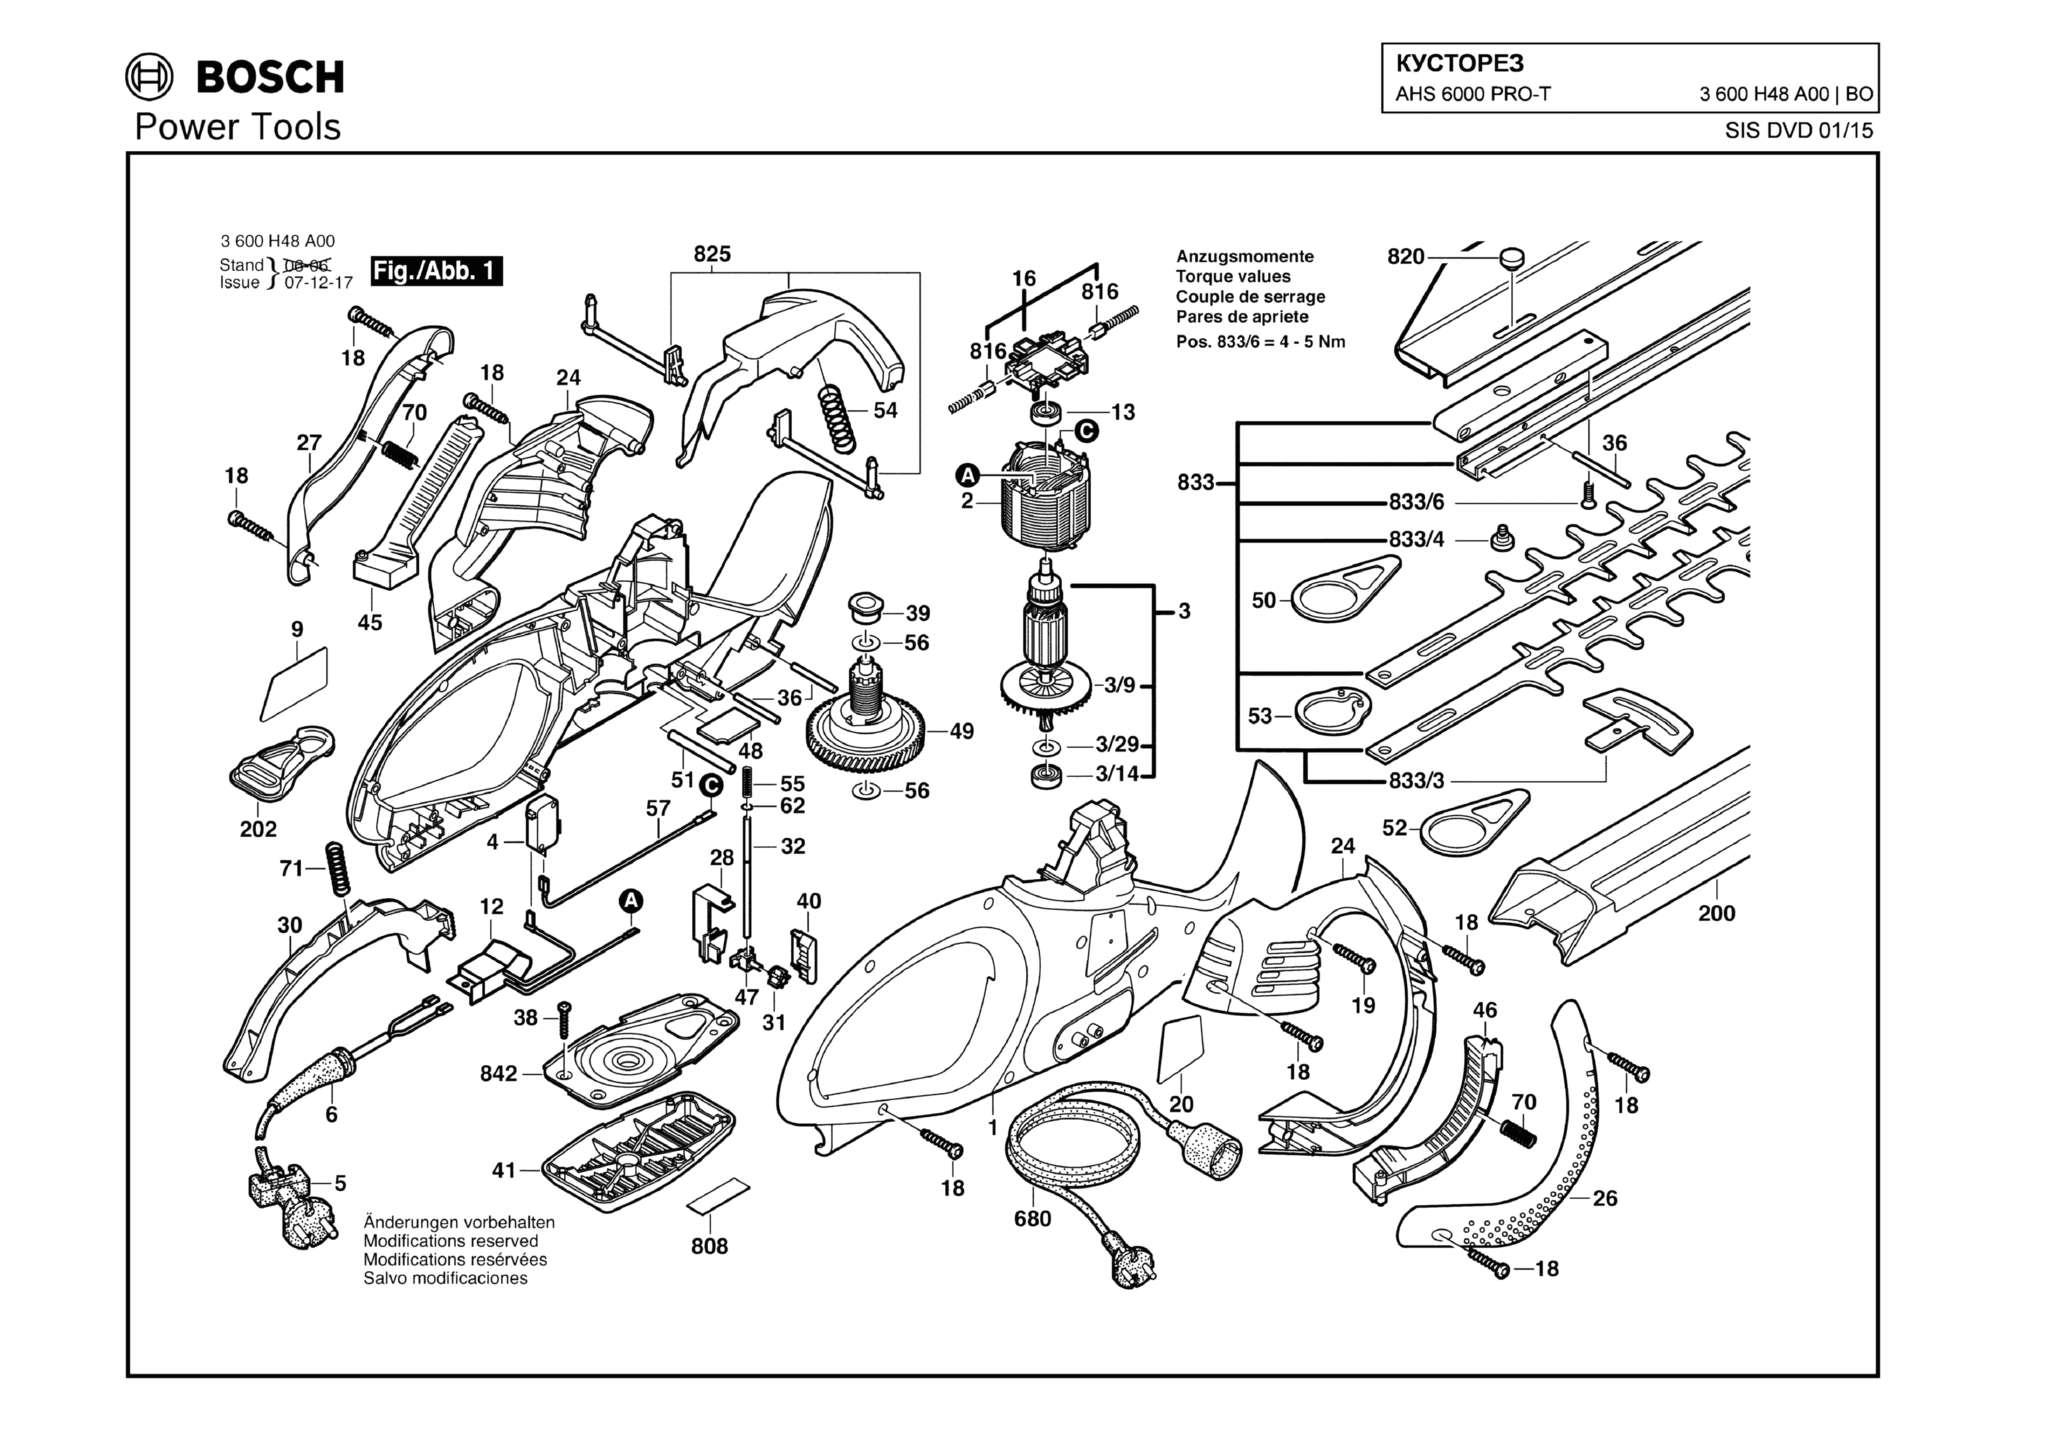 Запчасти, схема и деталировка Bosch AHS 6000 PRO-T (ТИП 3600H48A00)